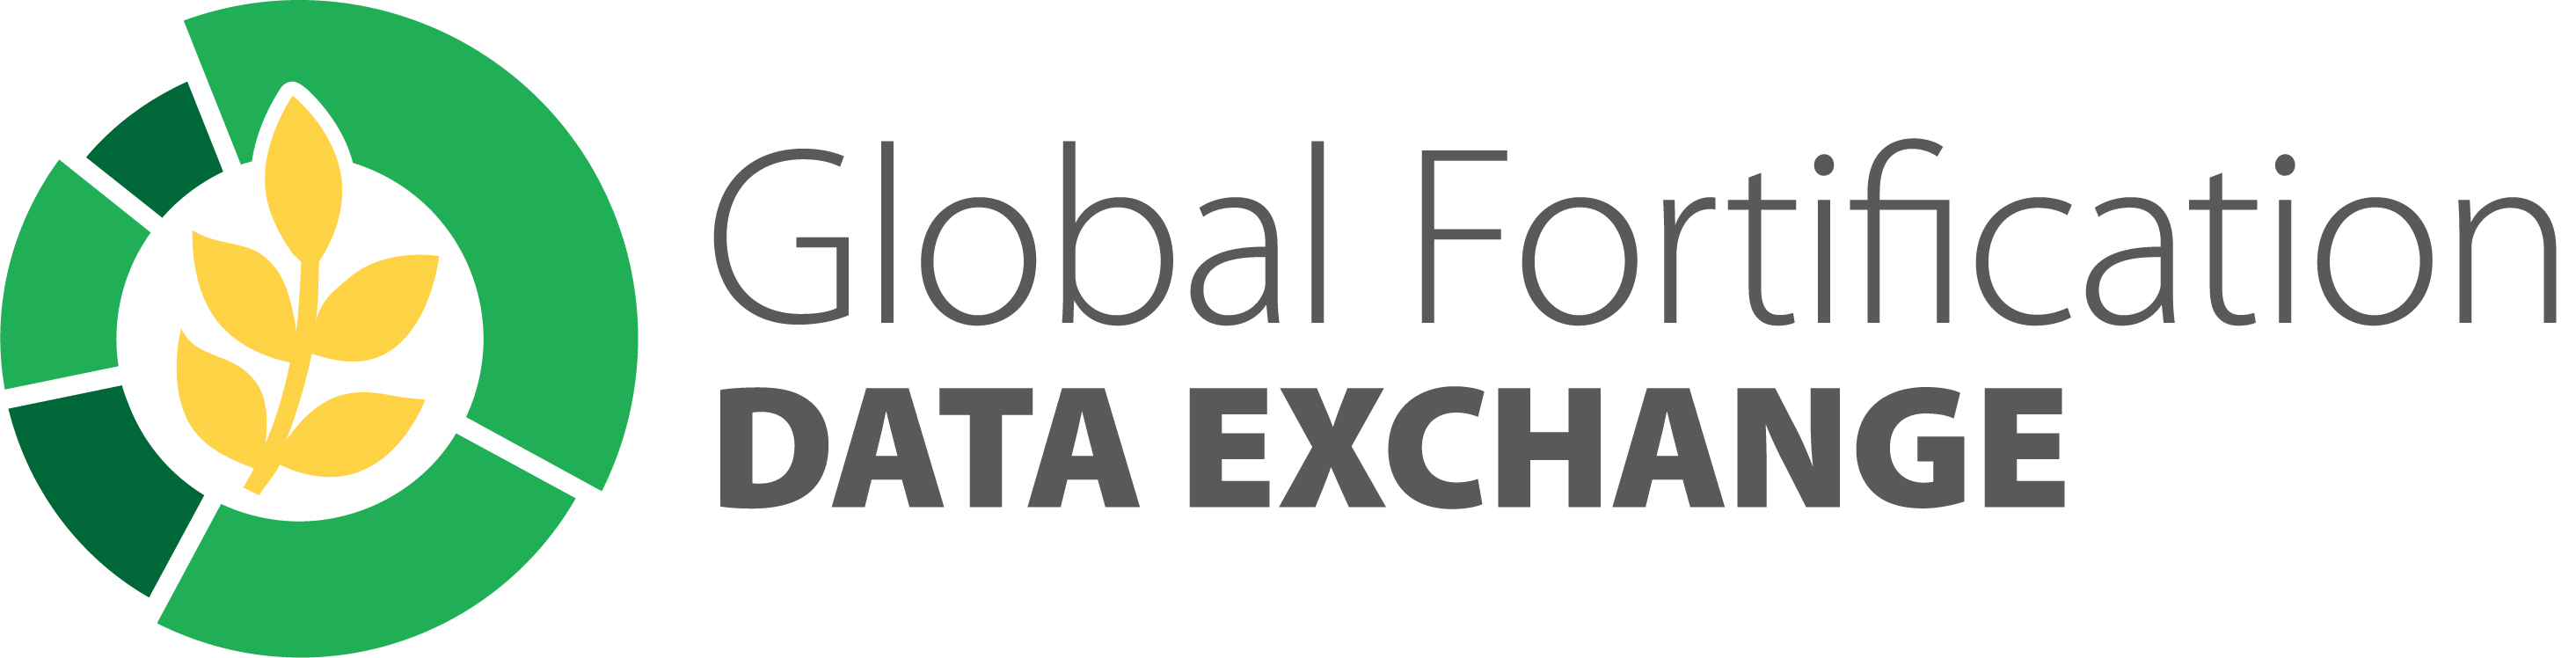 Global Fortification Data Exchange | GFDx